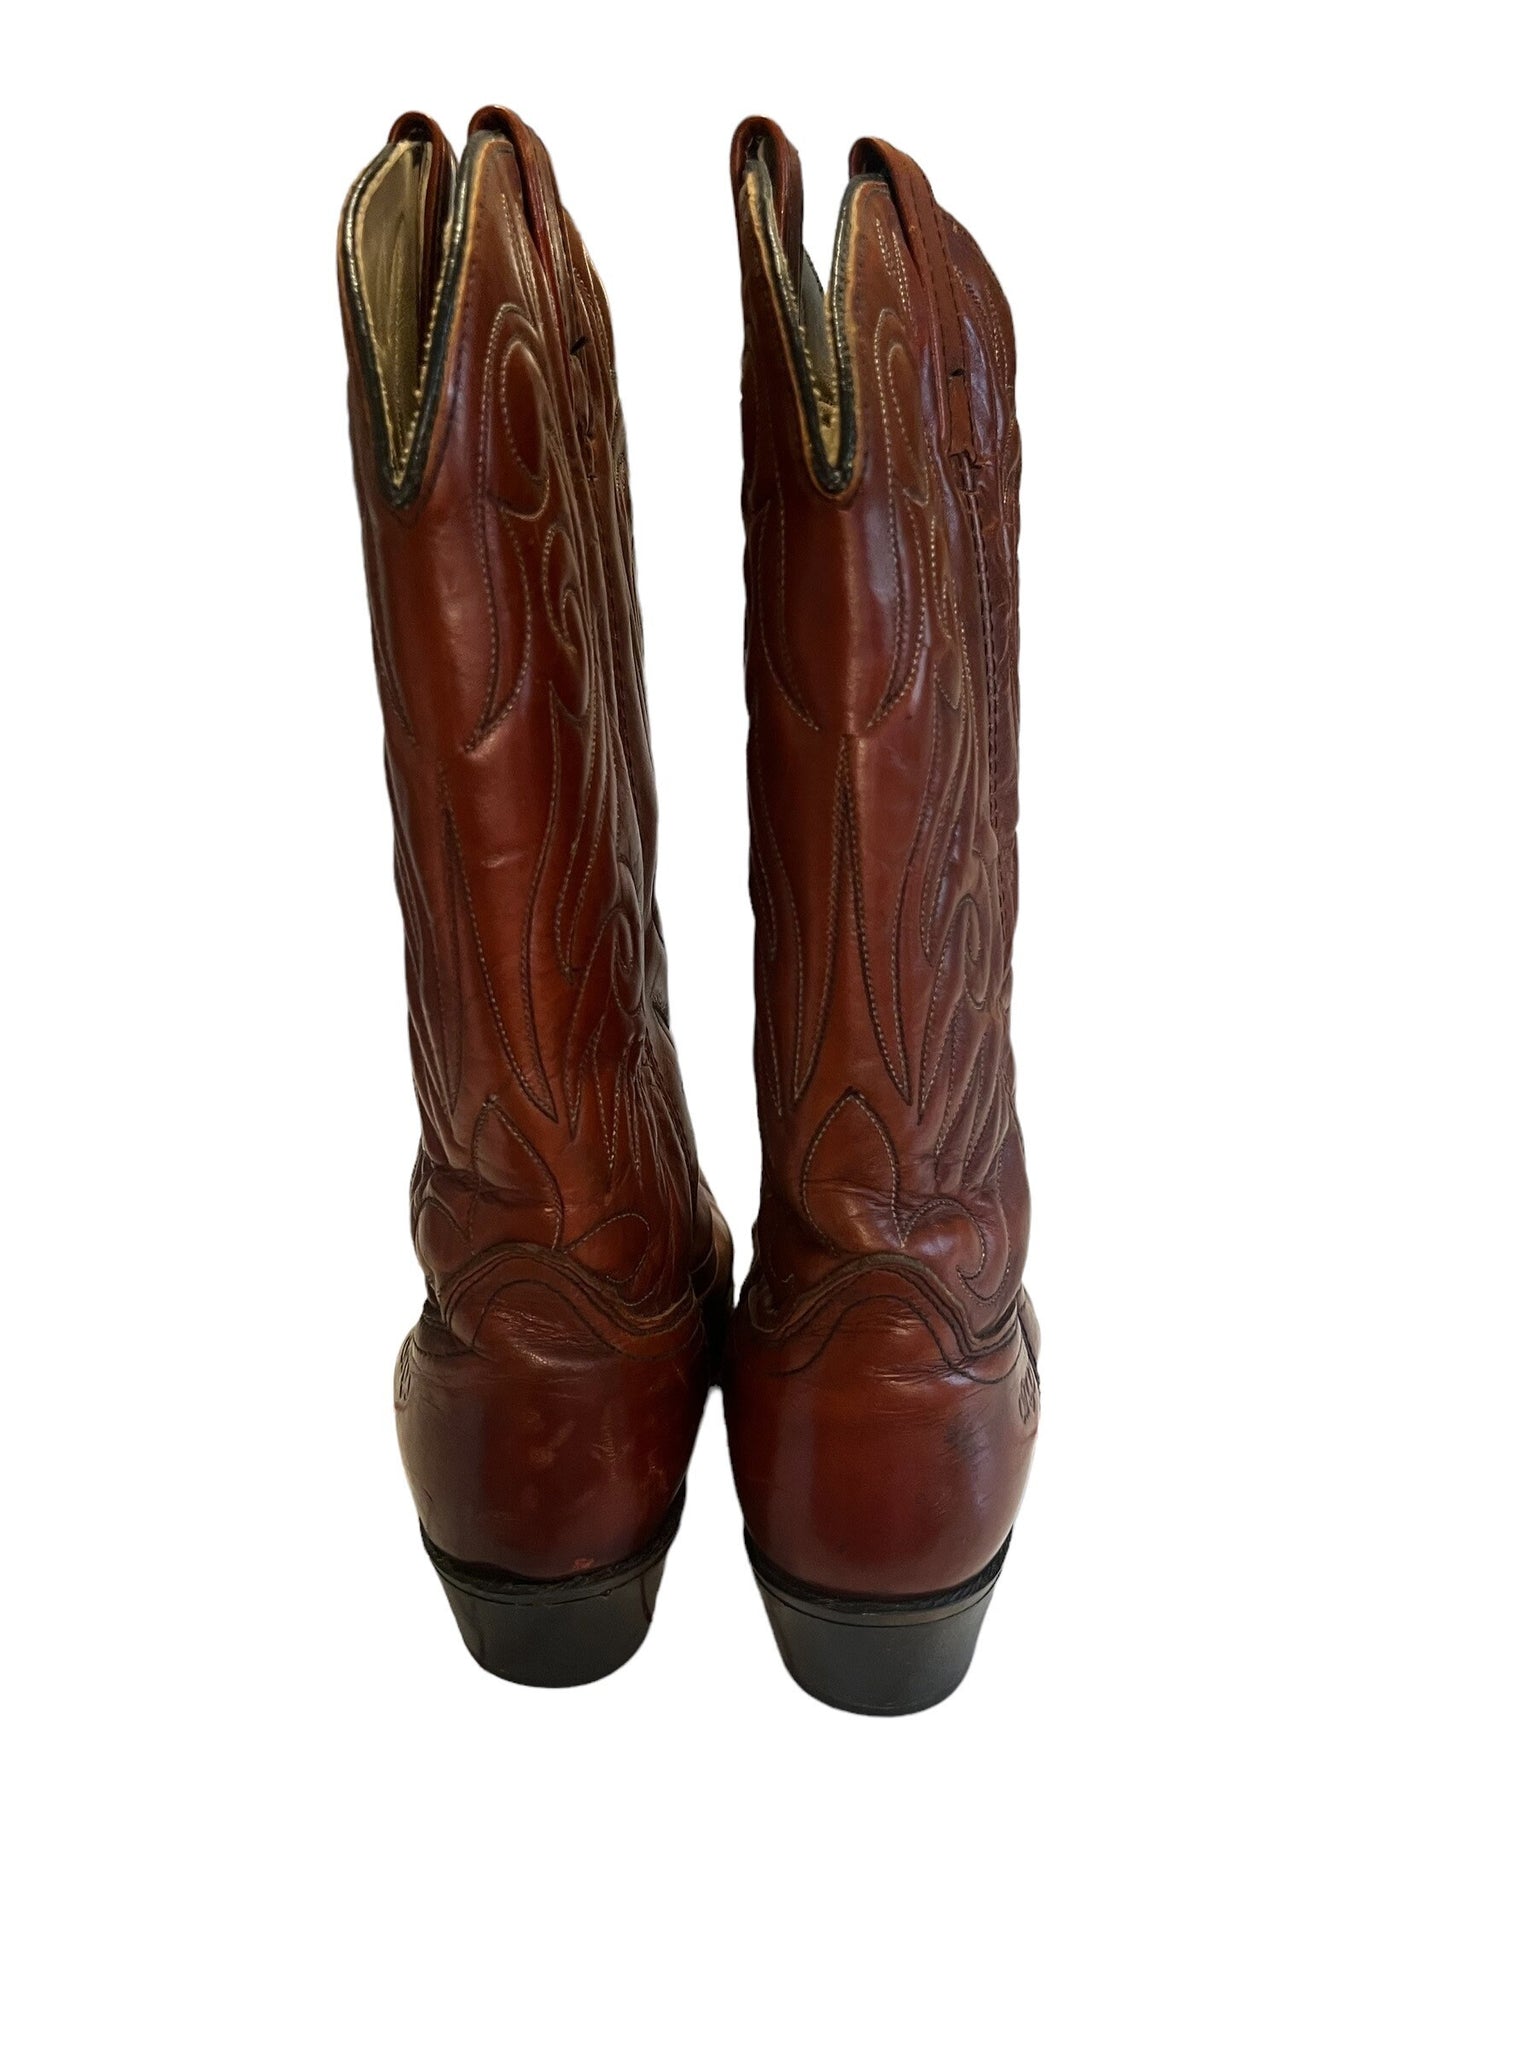 Vintage Dingo whiskey colored cowboy boots 9.5 D